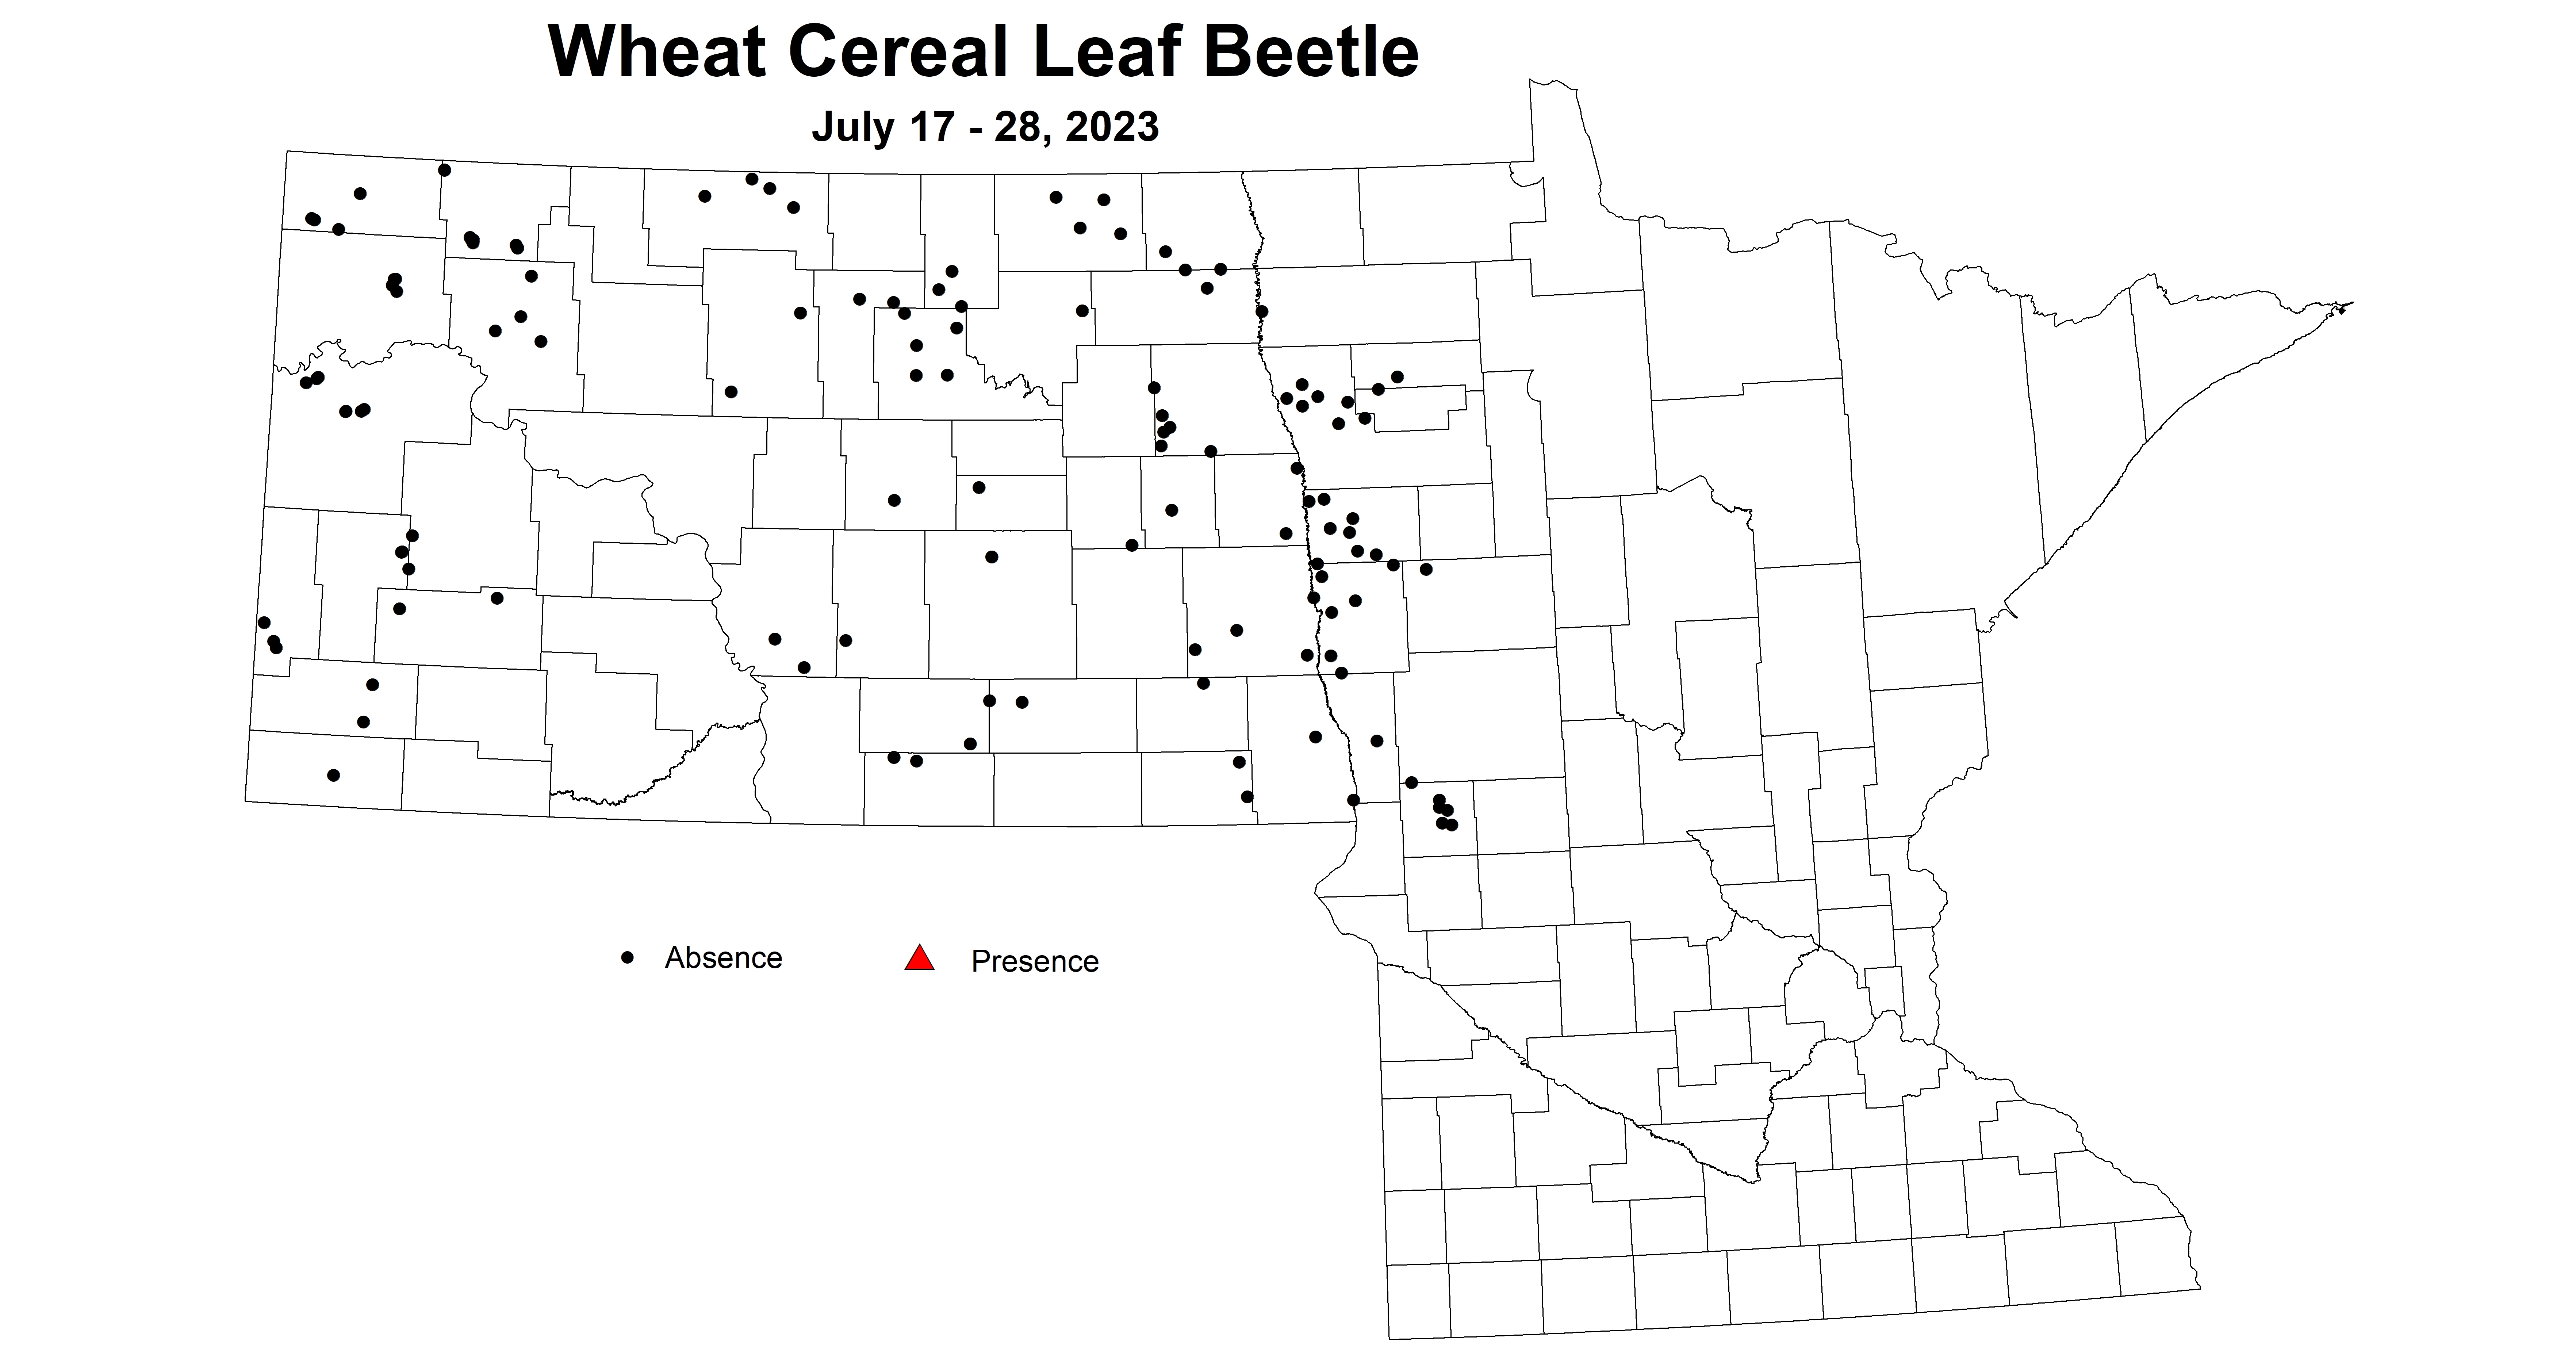 wheat cereal leaf beetle July 17-28 2023